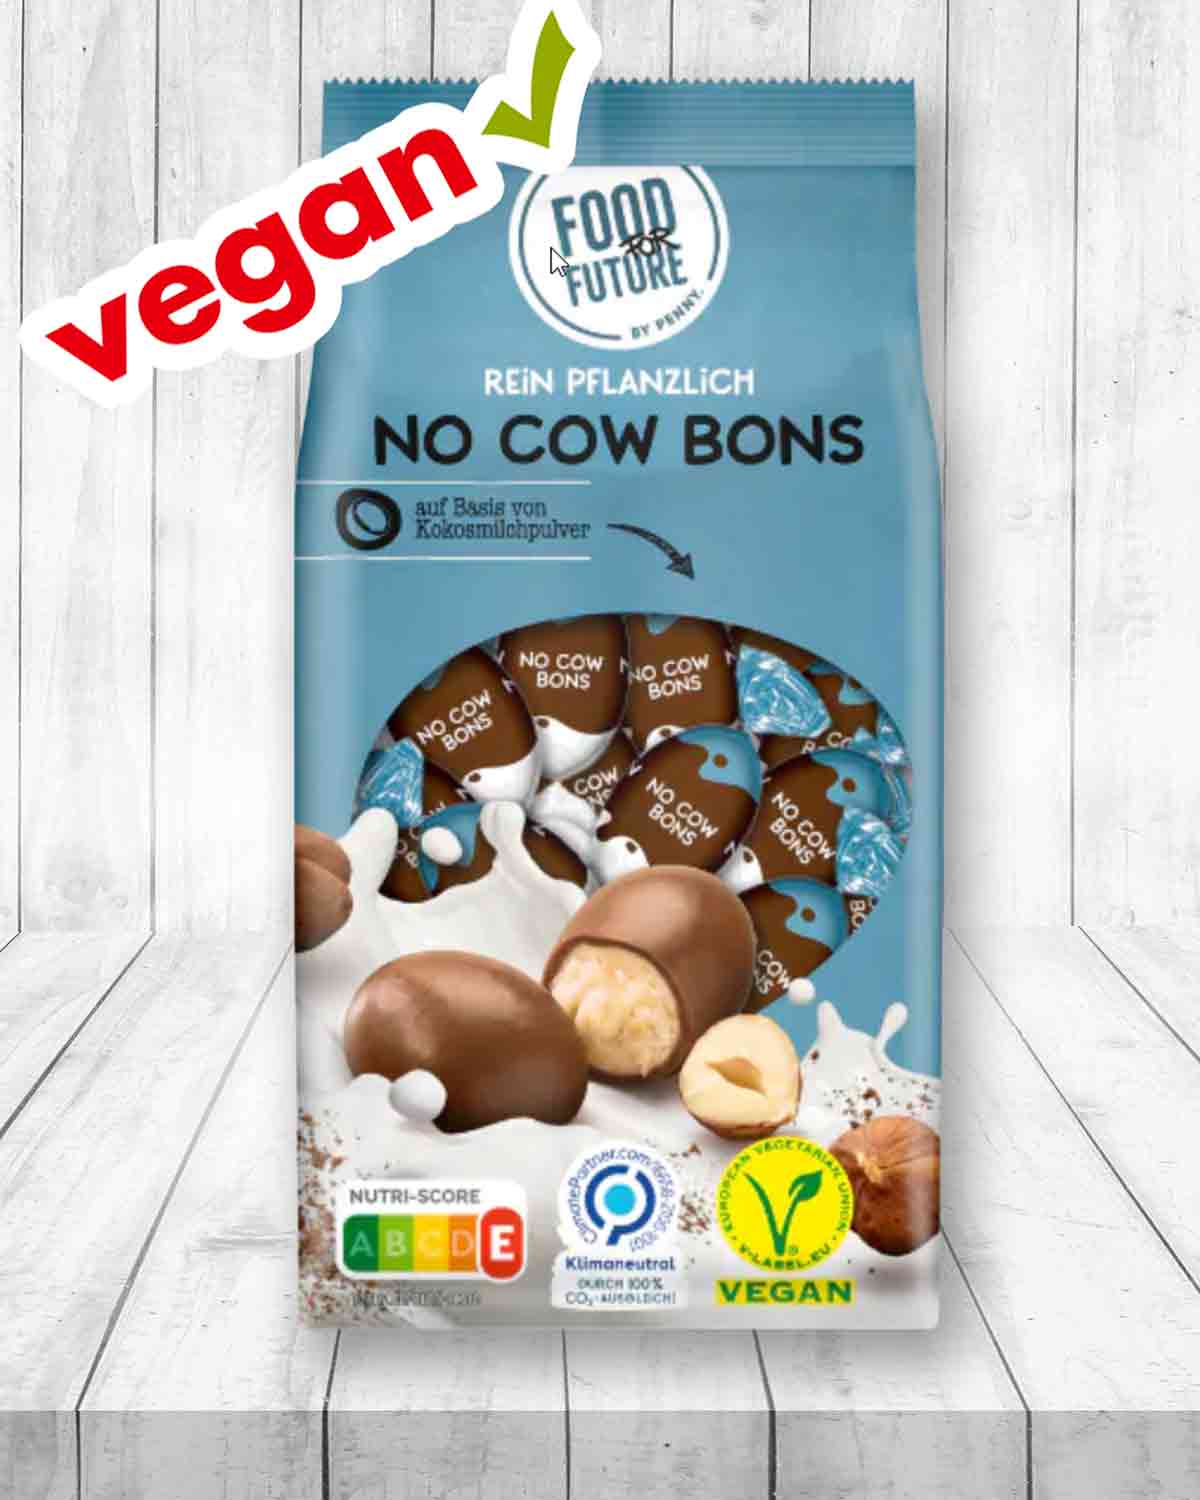 Vegane No Cow Bons von Penny